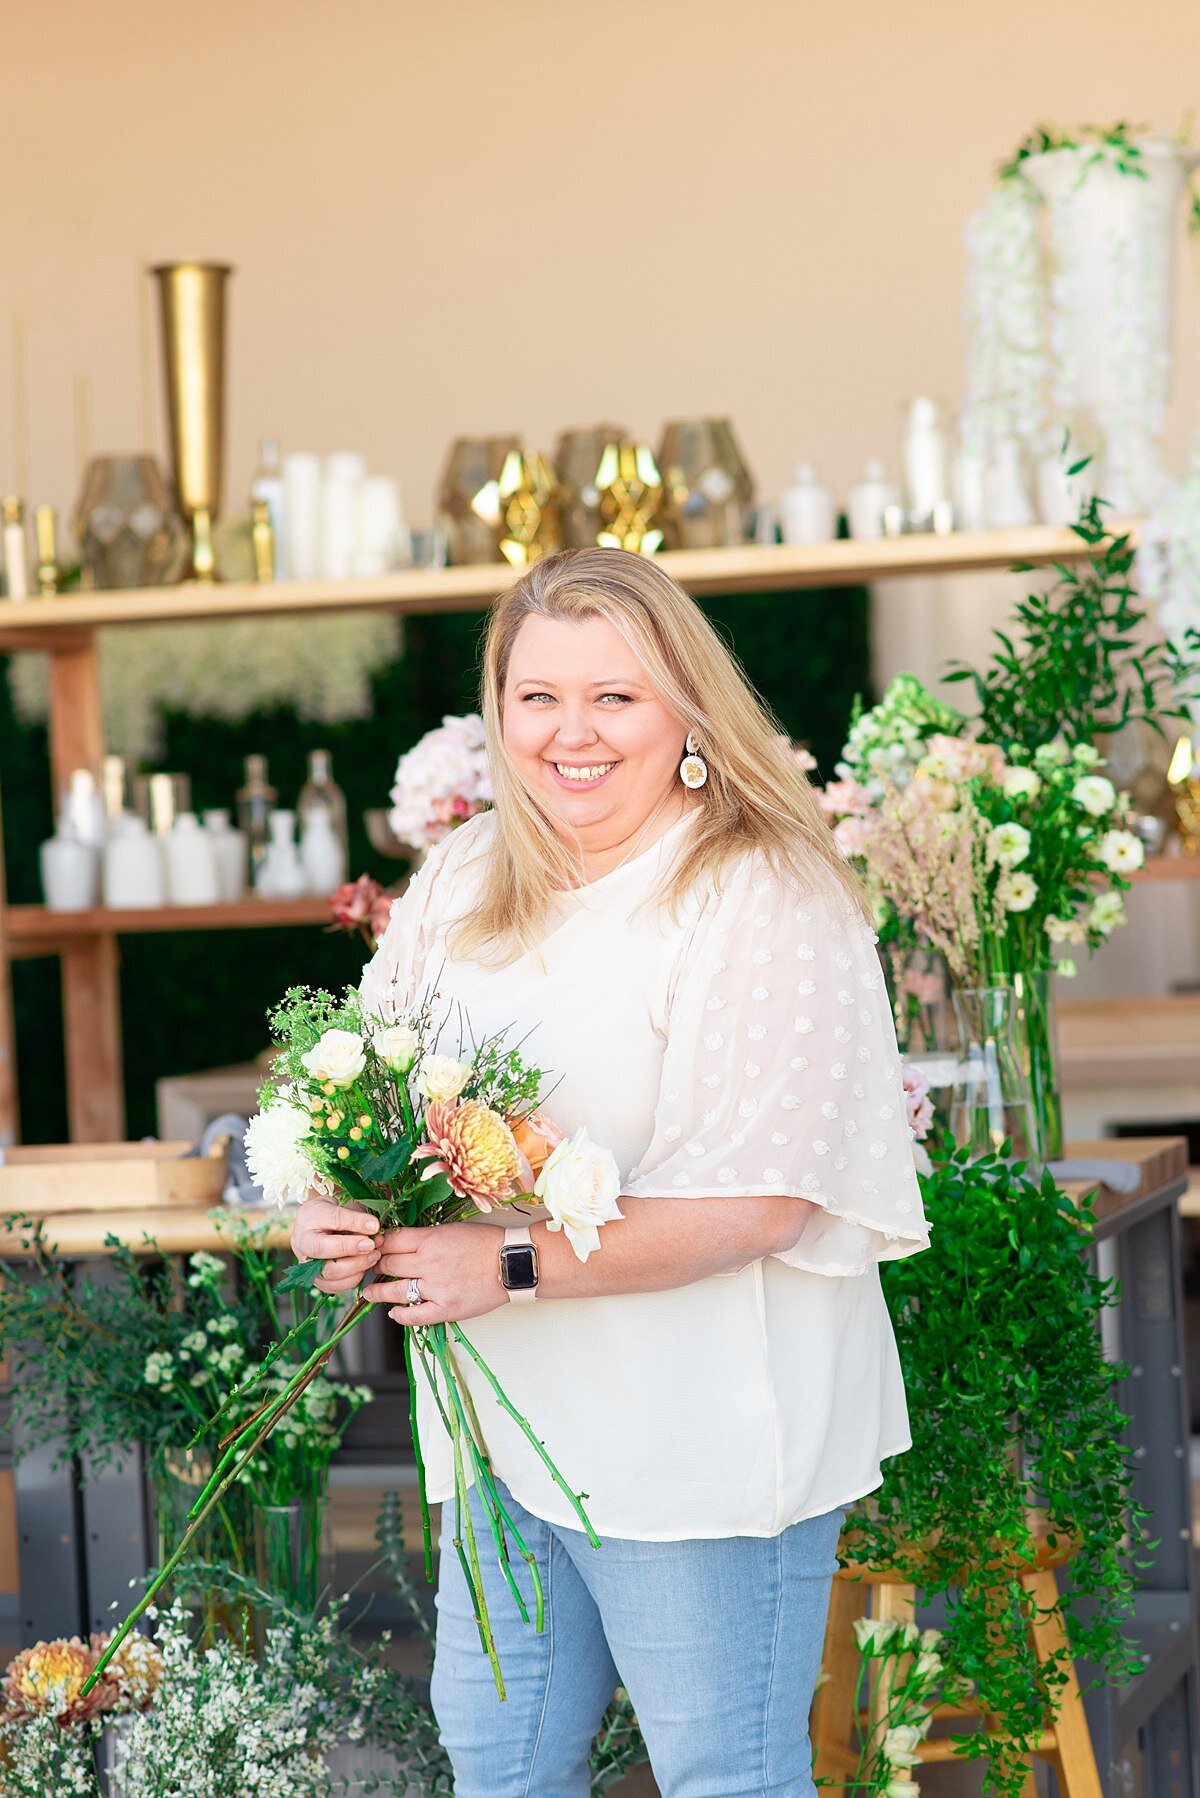 Flower shop owner smiling at camera as she puts together a flower order